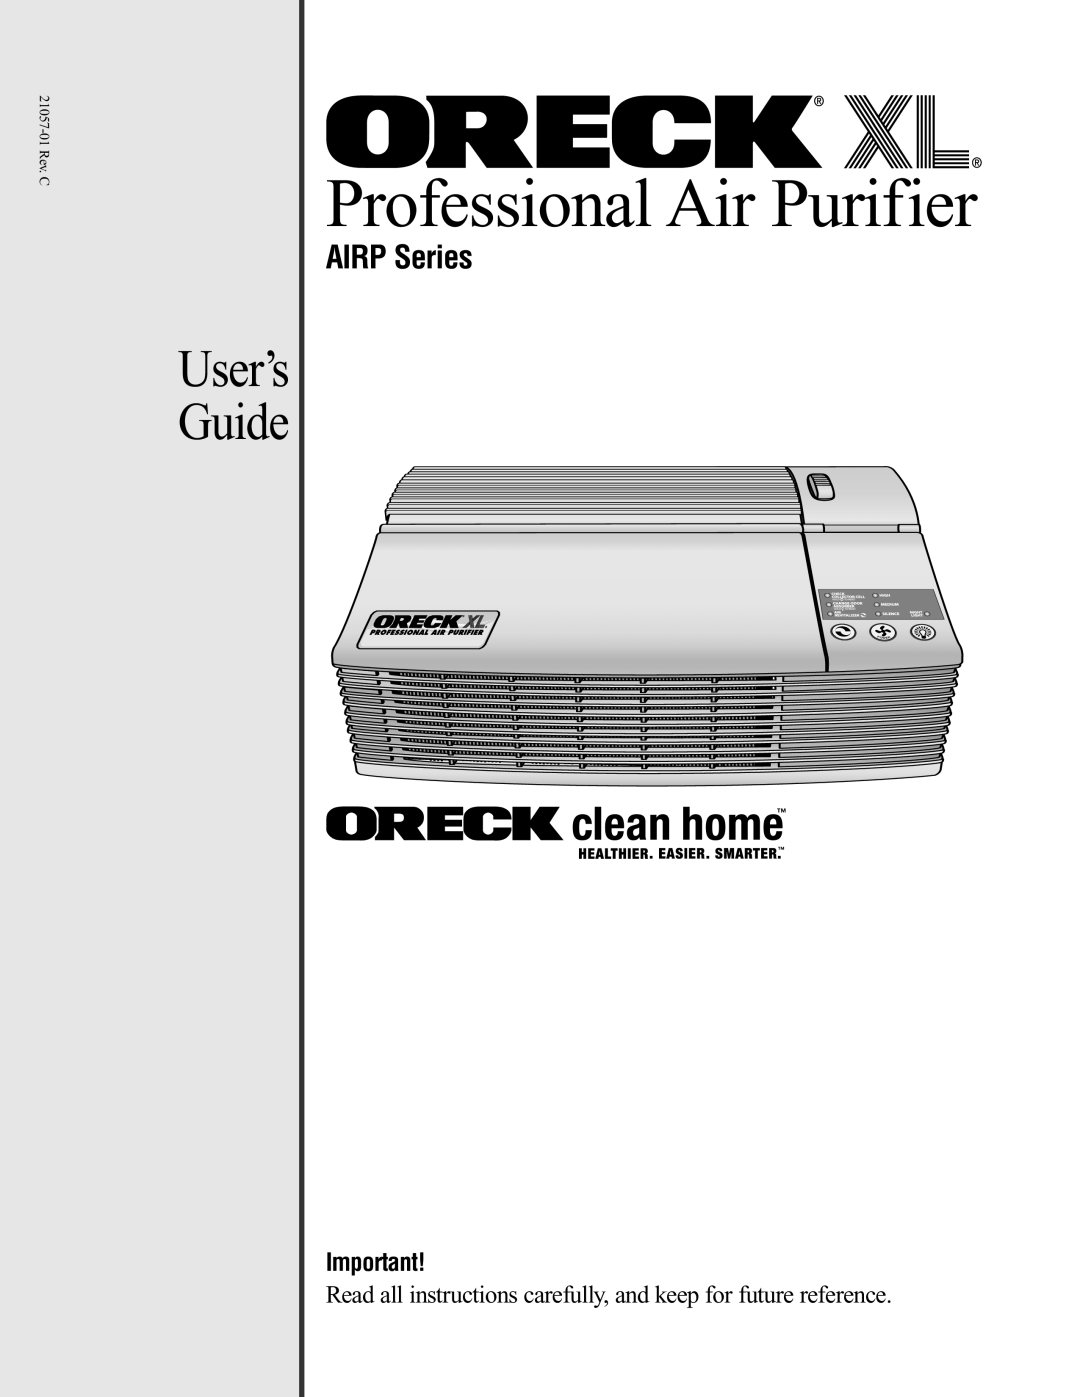 Oreck AIRP Series manual User’s Guide, Professional Air Purifier, 21057-01Rev. C 